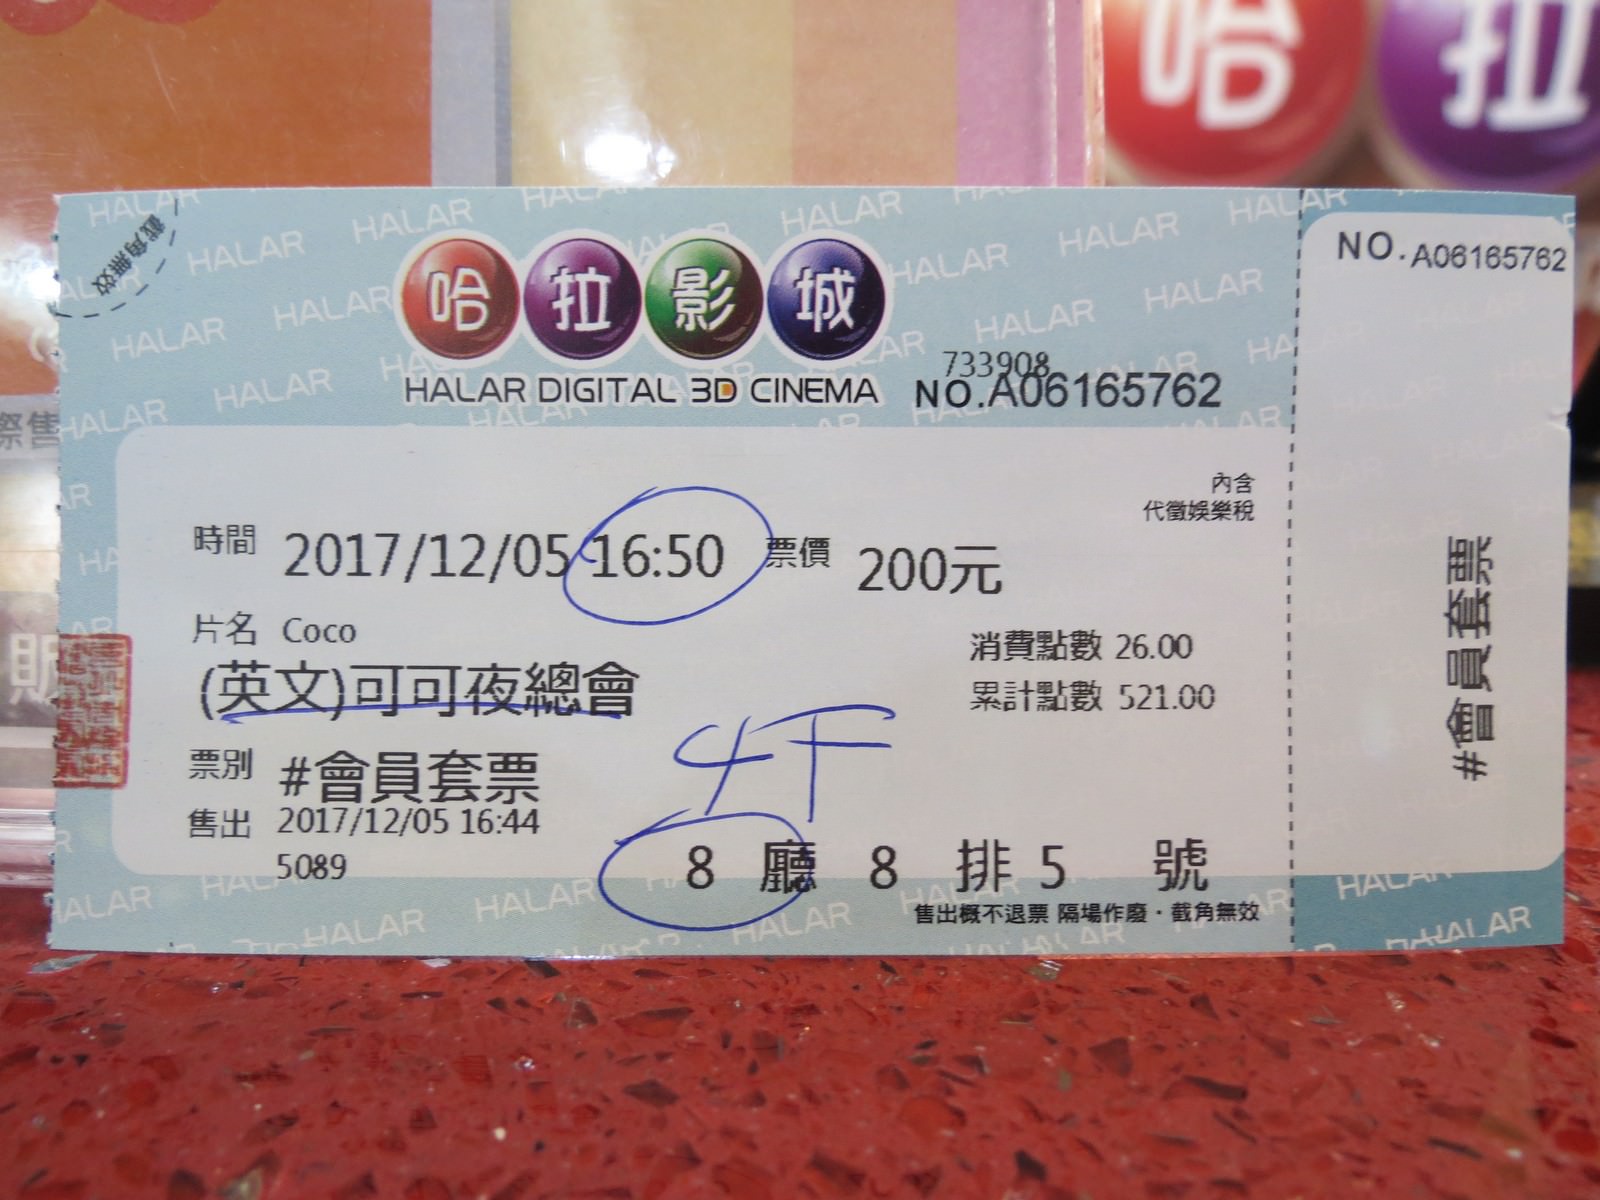 Movie, Coco(美國, 2017年) / 可可夜總會(台灣) / 寻梦环游记(中國) / 玩轉極樂園(香港), 電影票